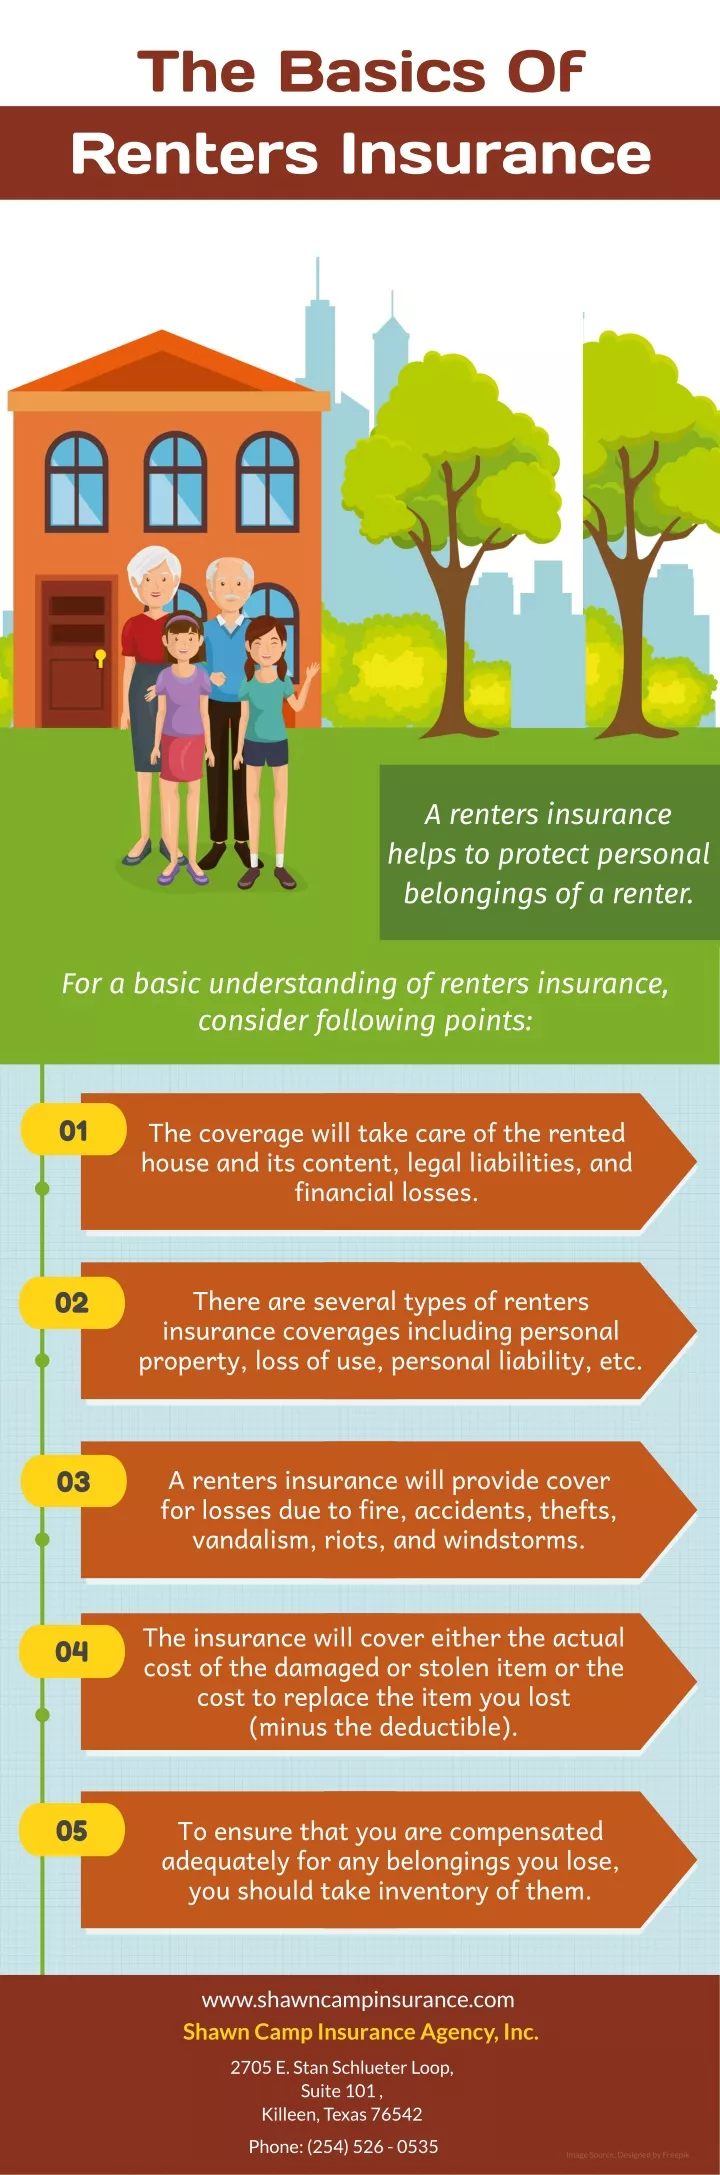 the basics of renters insurance